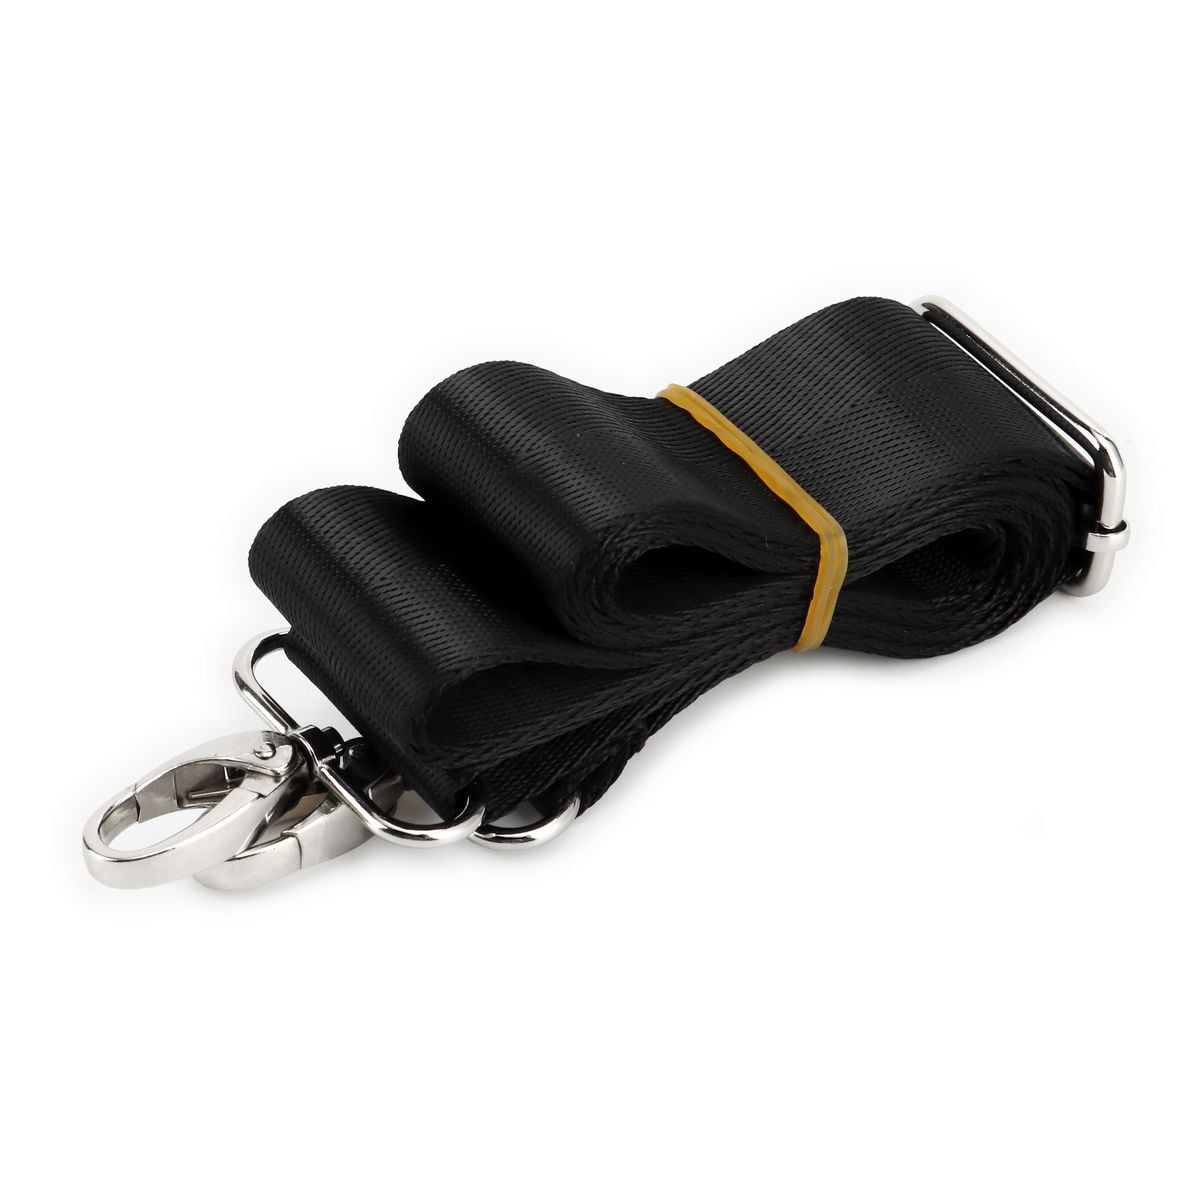 Gustave Purse Strap Replacement Wide Shoulder Strap Adjustable Replacement Nylon Crossbody Bag Handbag Strap 59 inch Long, Black, Adult Unisex, Size